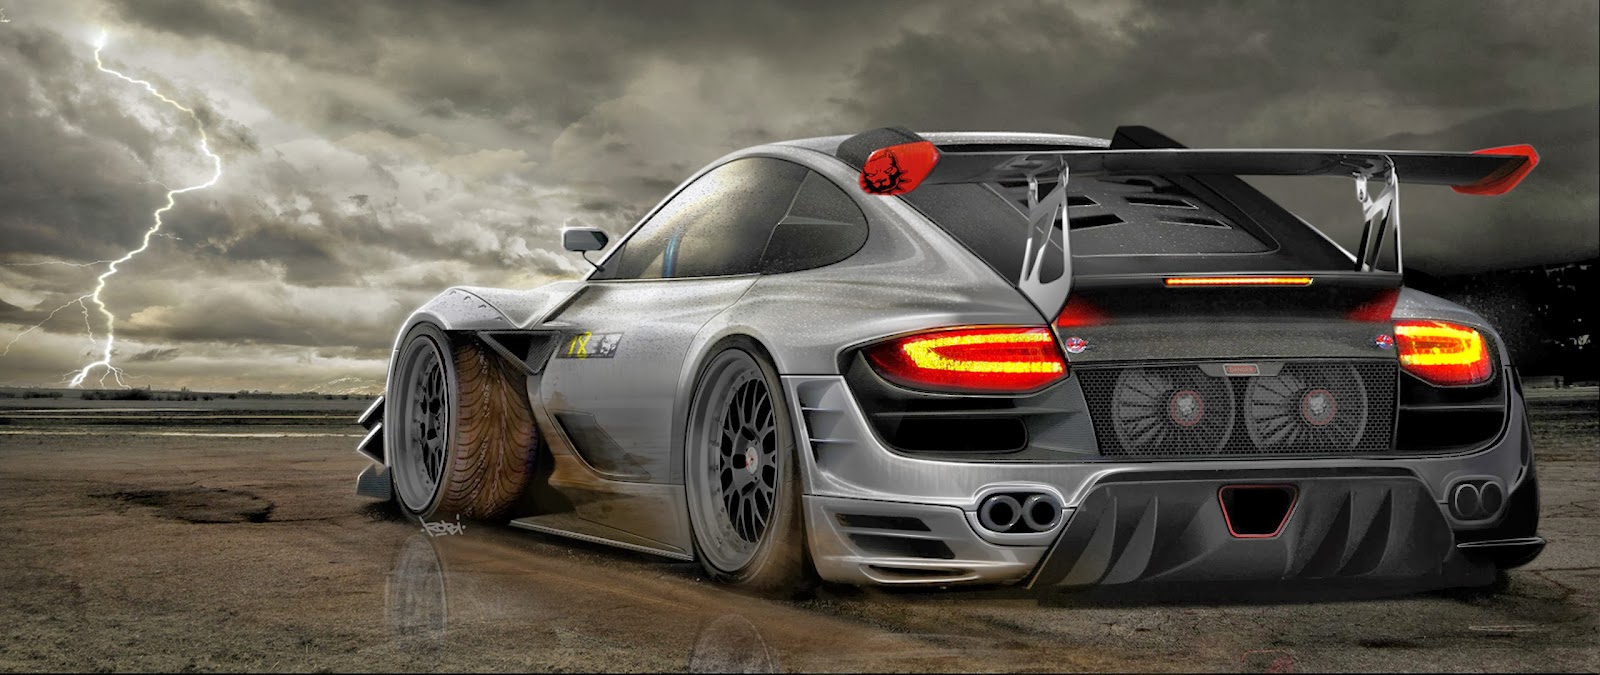 Porsche Escape Night And Lighting Wallpaper Cars HD